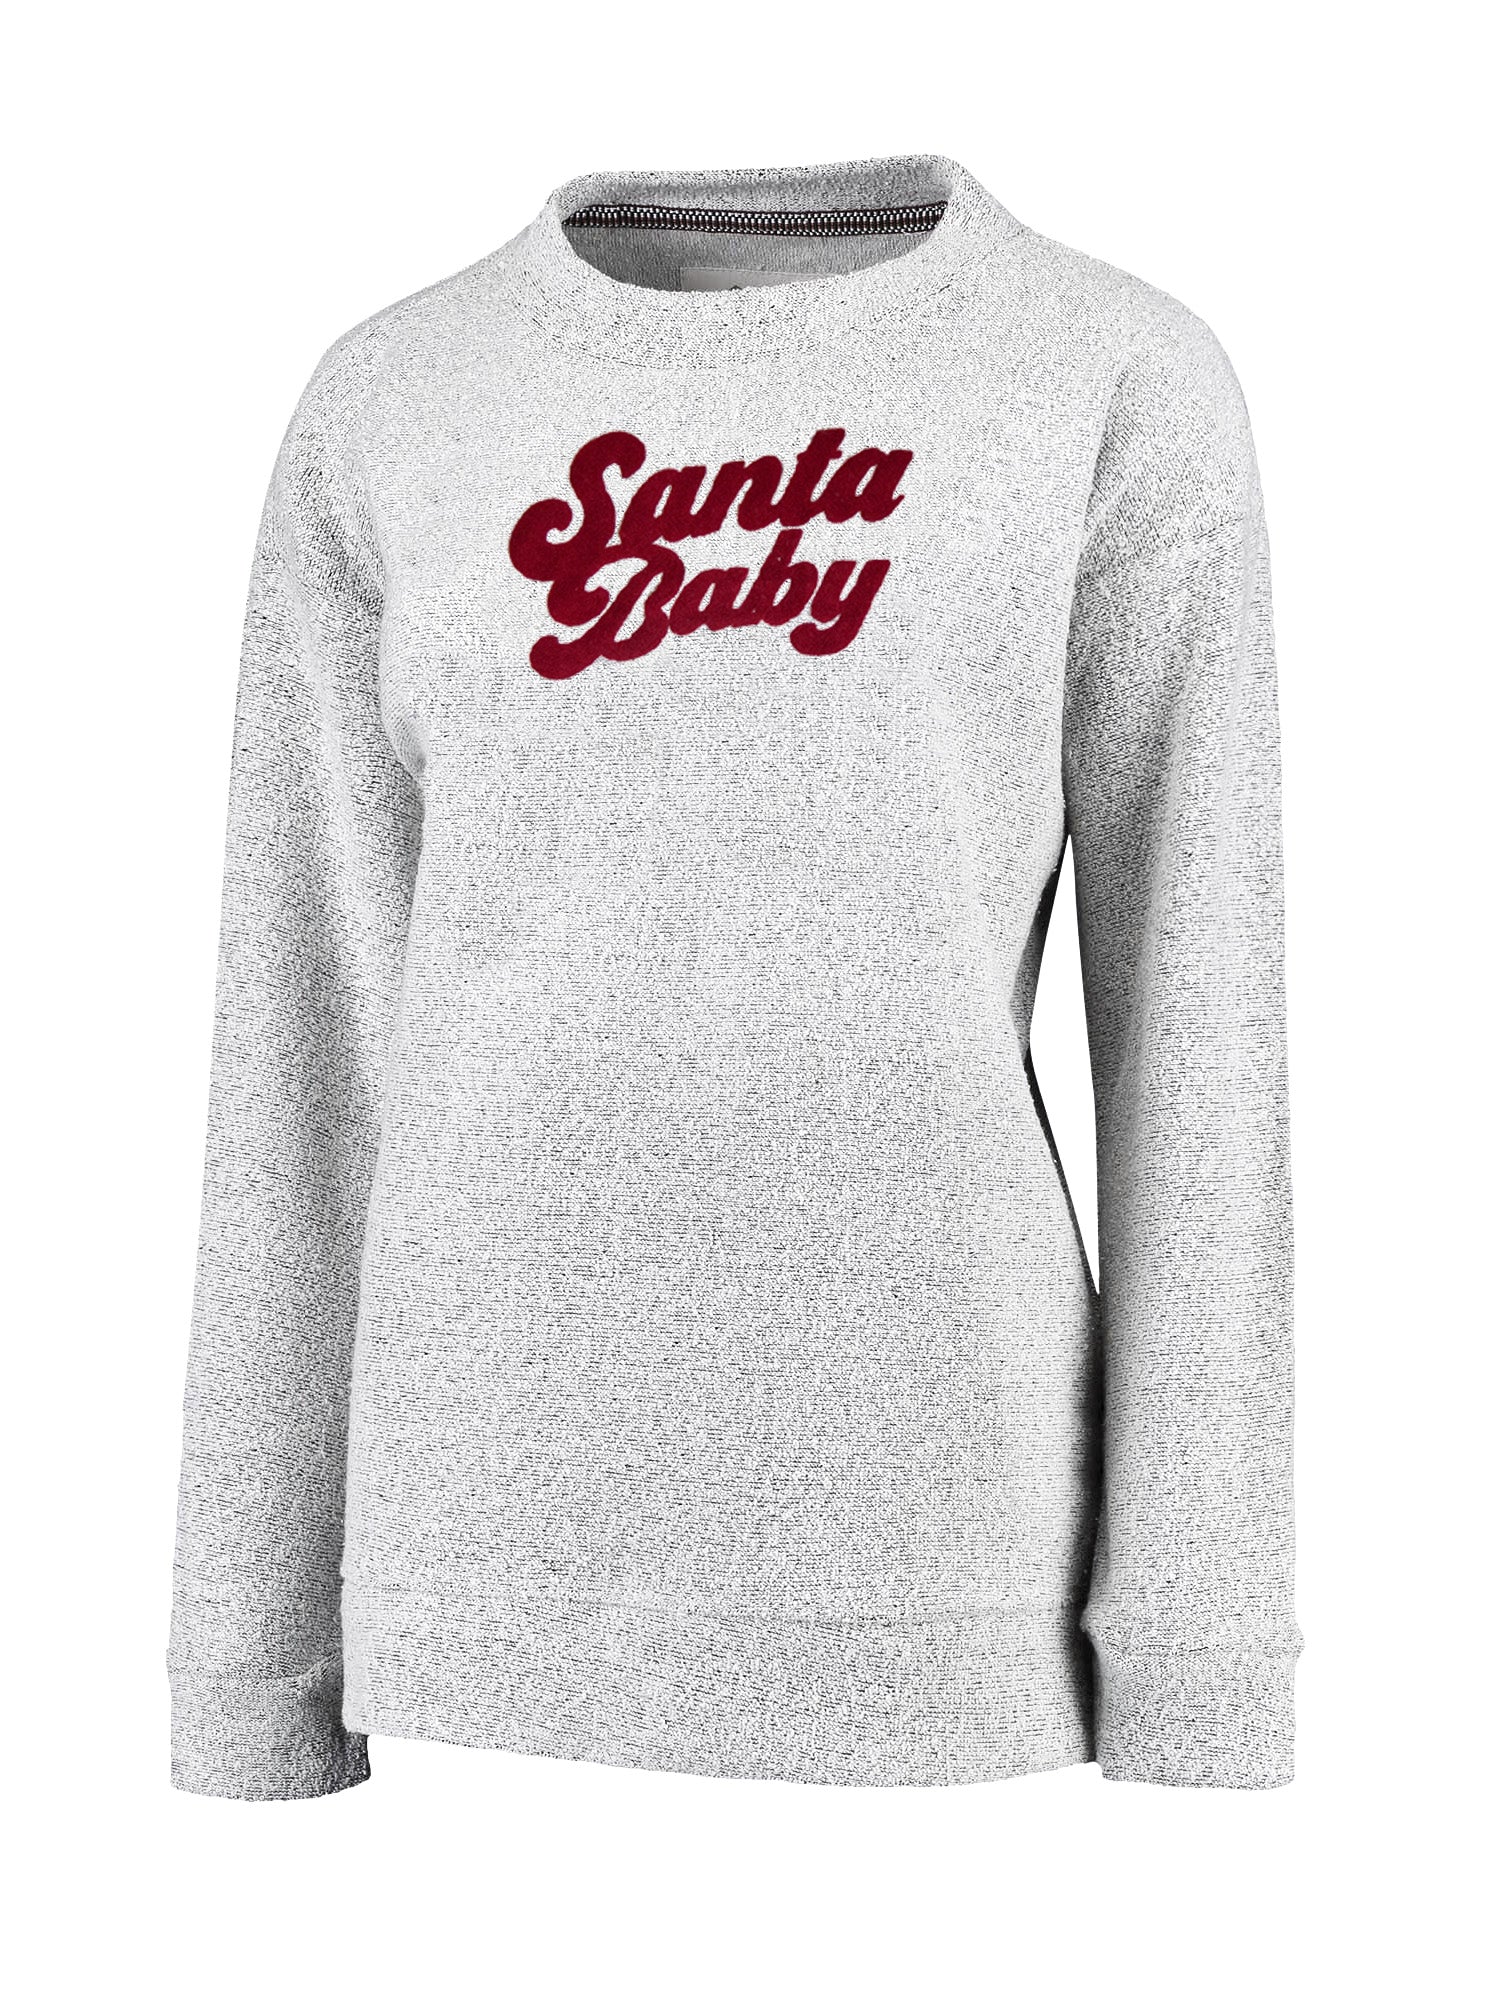 Royce Comfy Terry Sweatshirt For Ladies-Silver-RT854